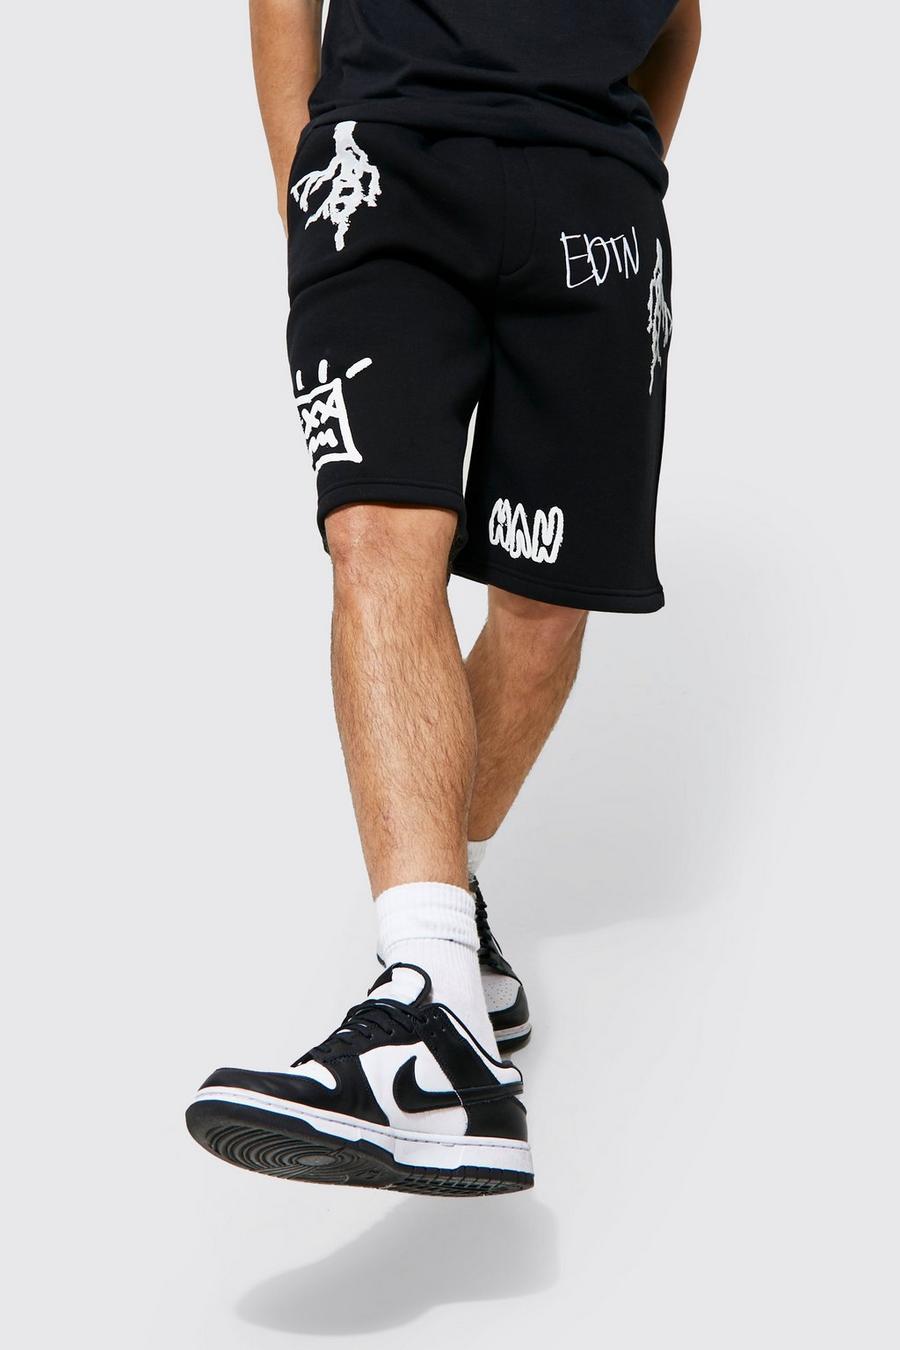 Black Oversized Edtn Graphic Jersey Shorts